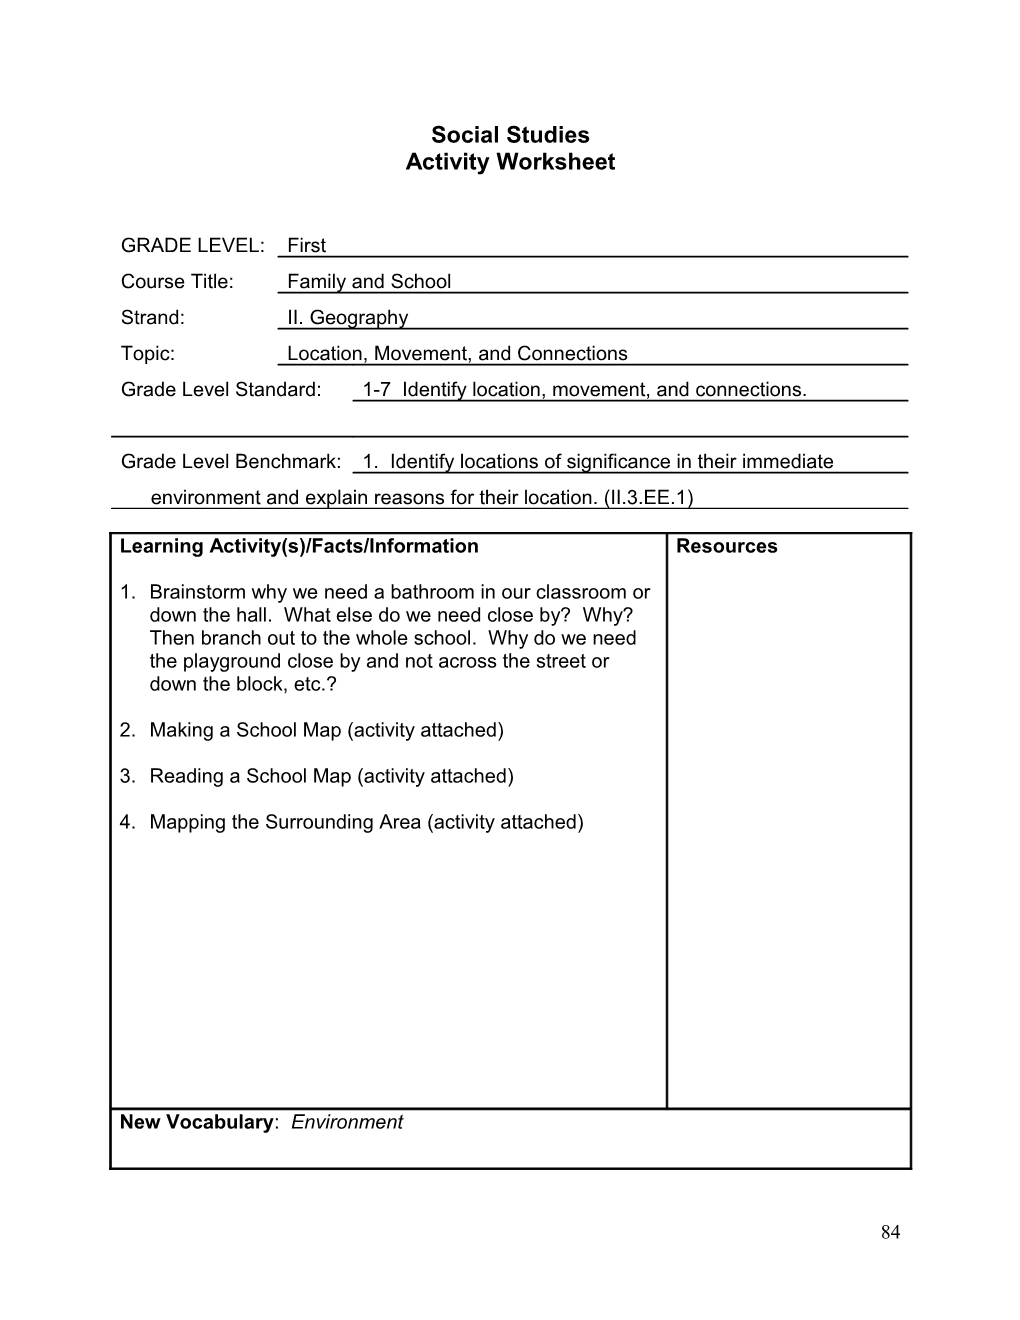 Activity Worksheet s1